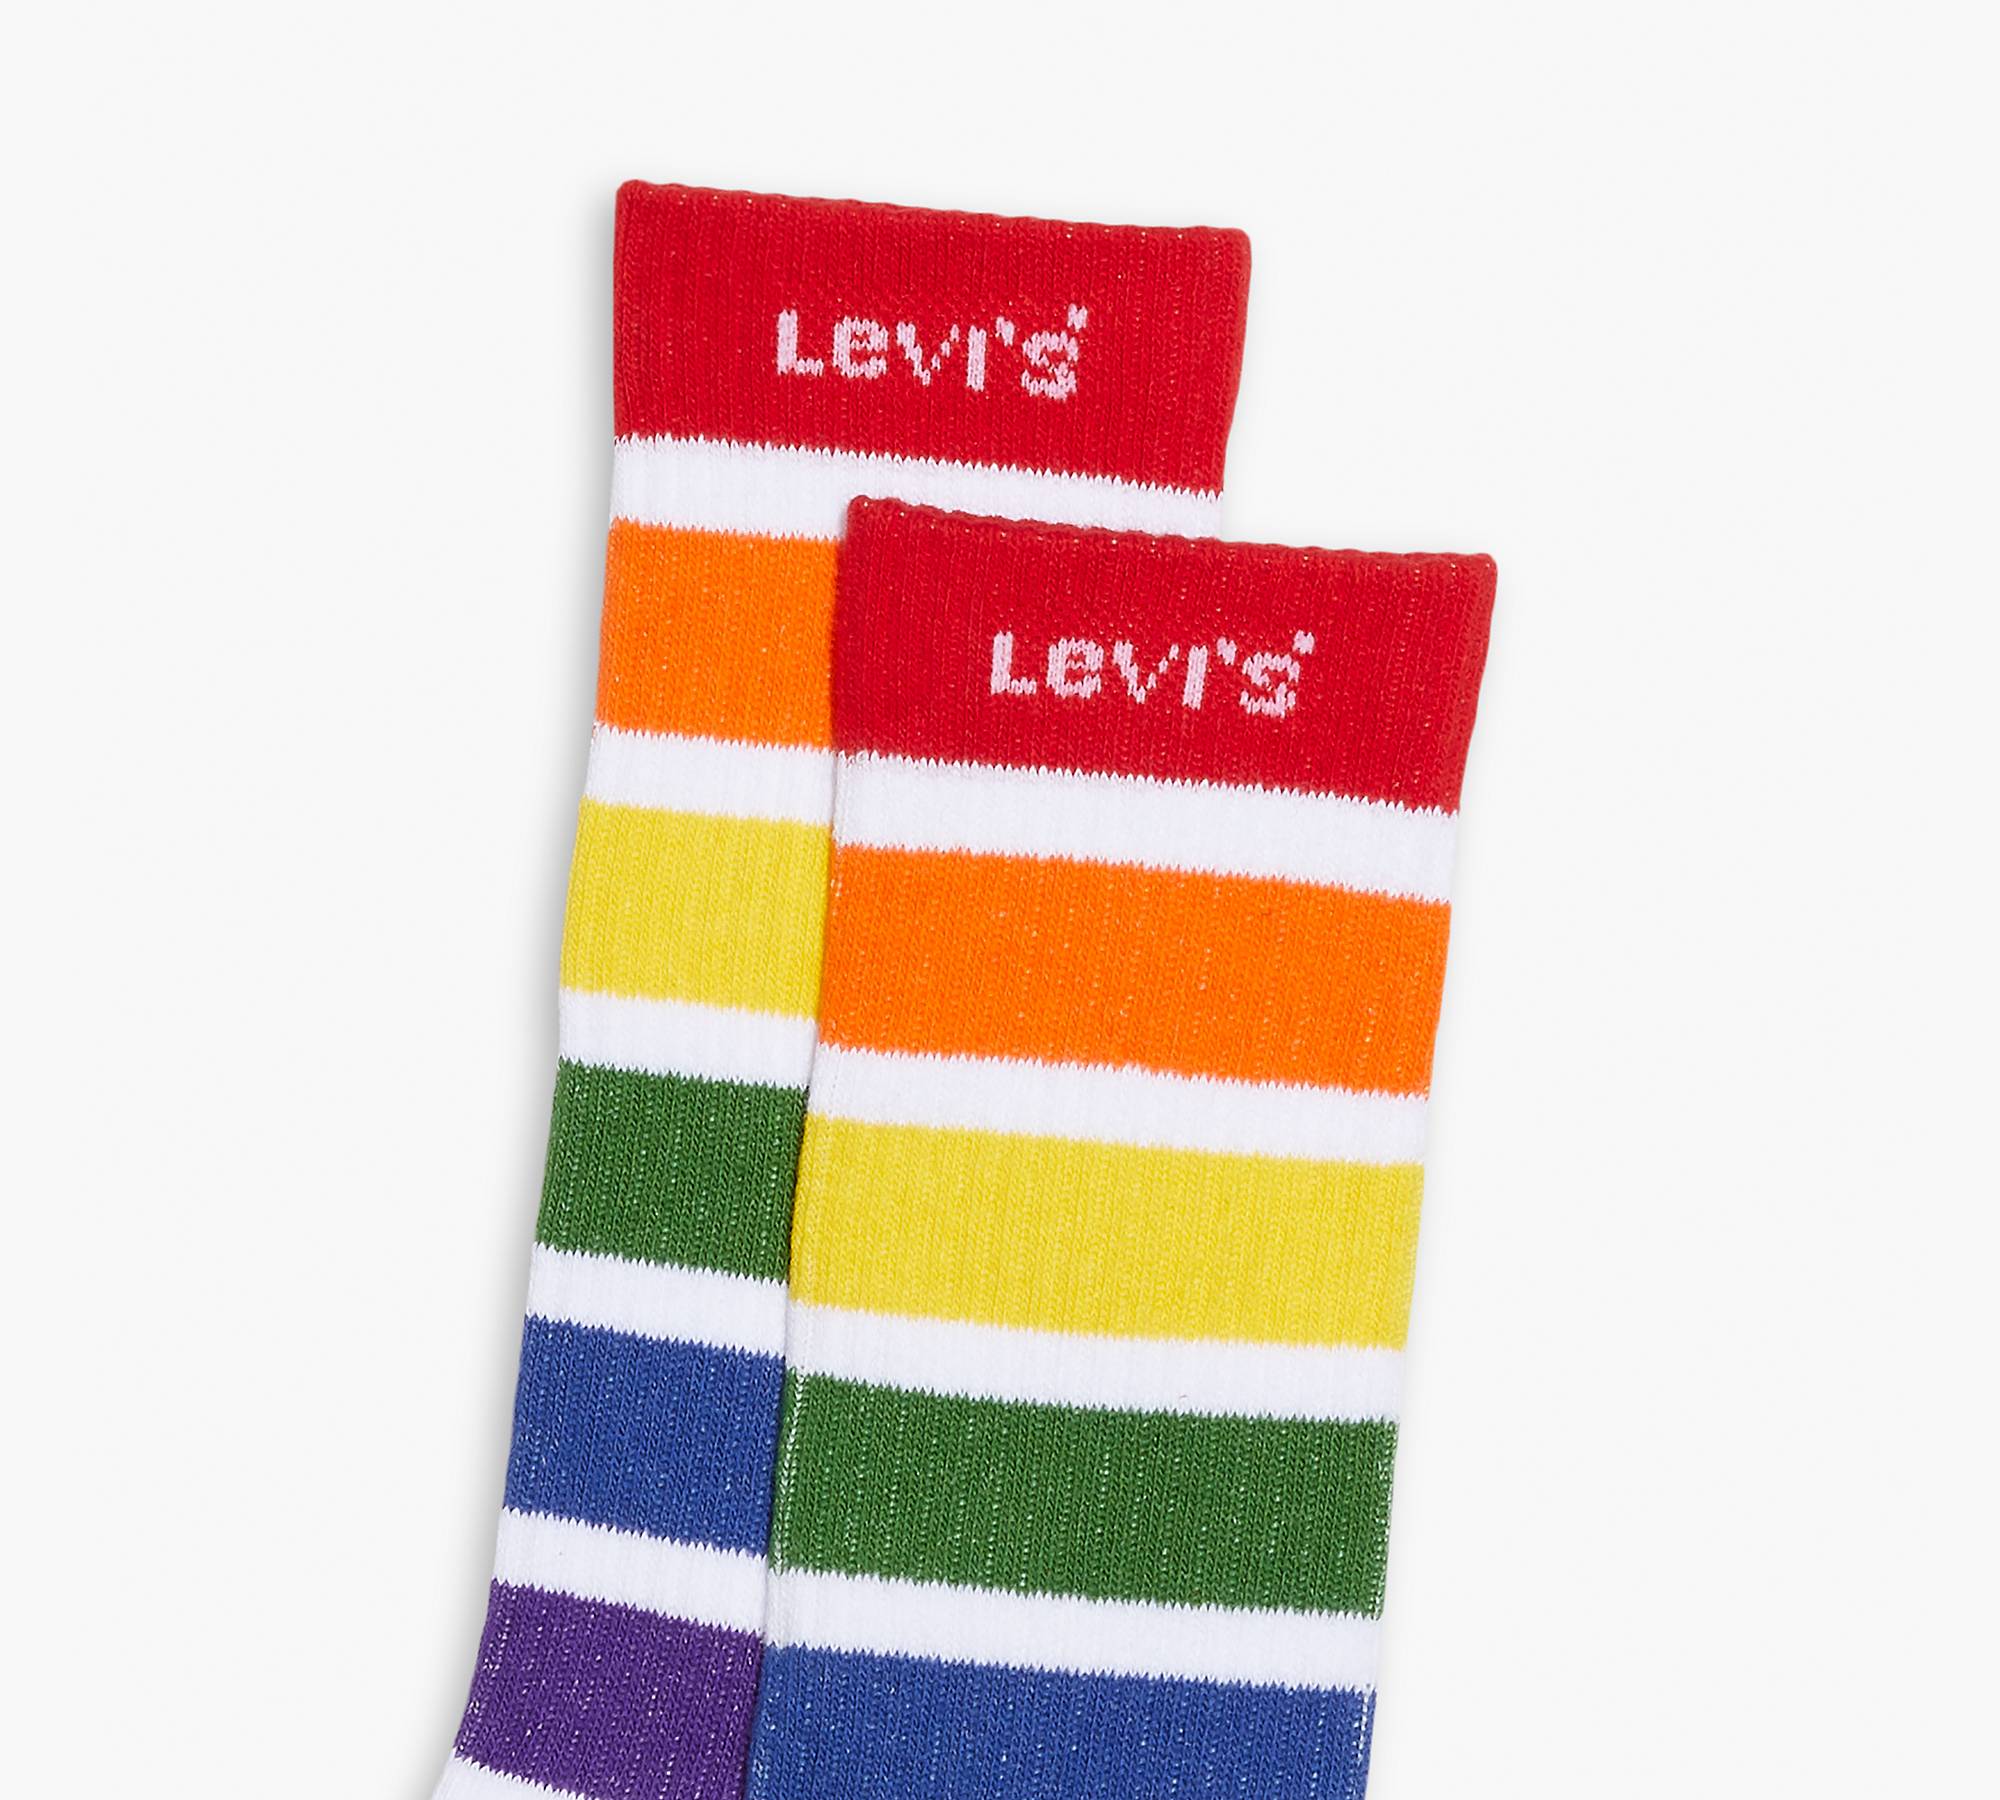 Levi's® Pride 2 Pack Regular Cut Socks - White | Levi's® US